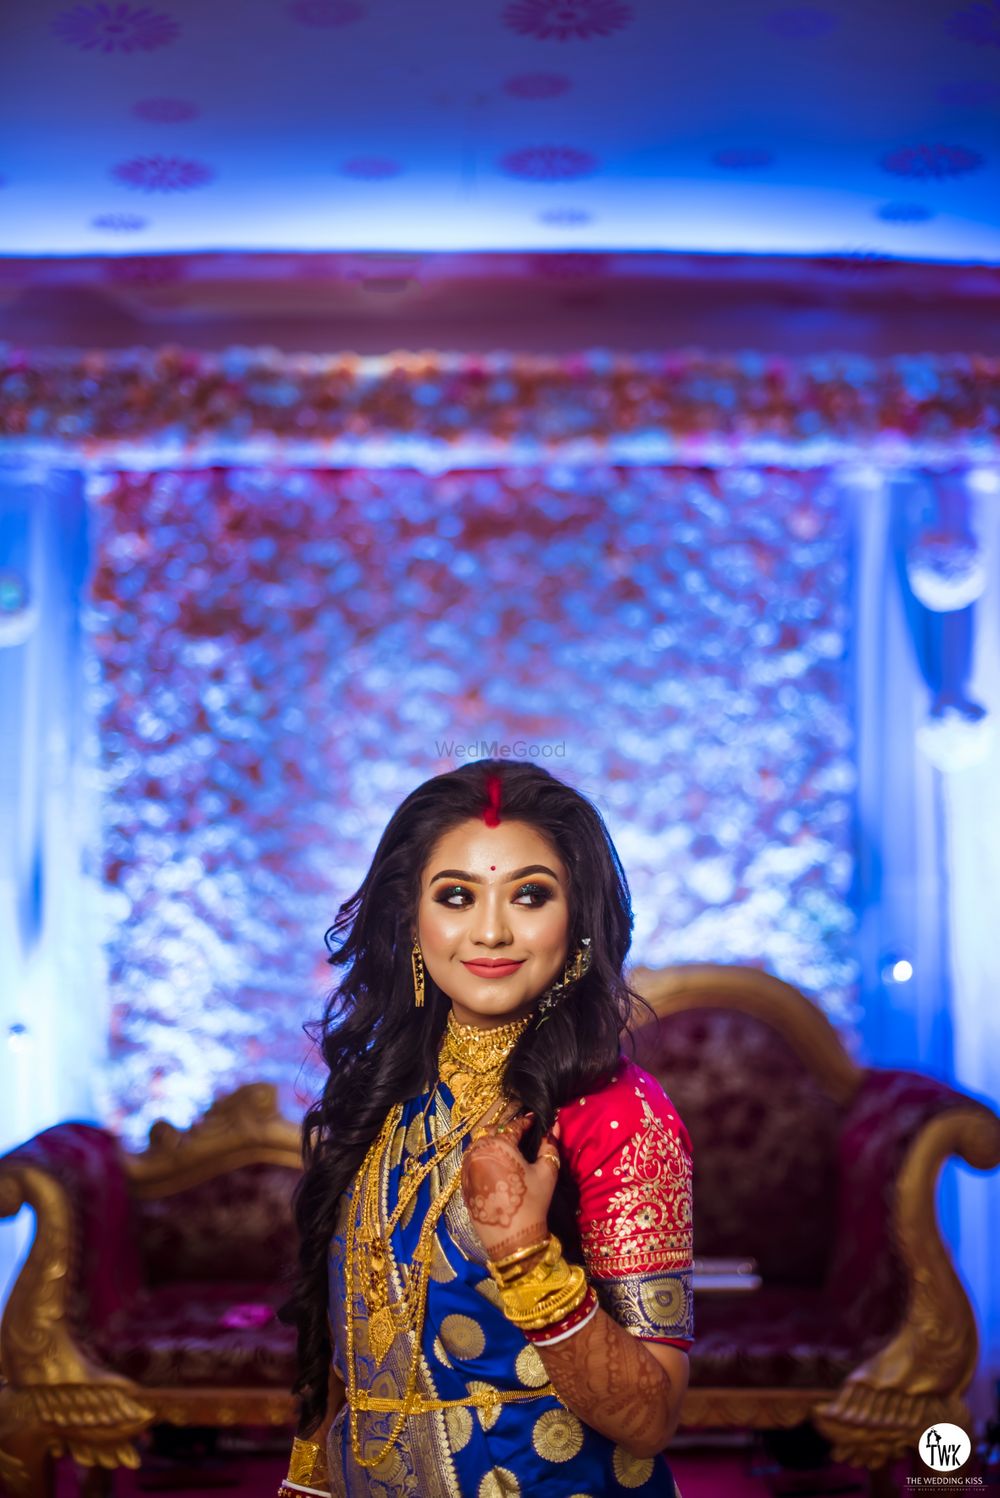 Photo From Arghya & Priyanka - A Bengali Wedding - By The Wedding Kiss